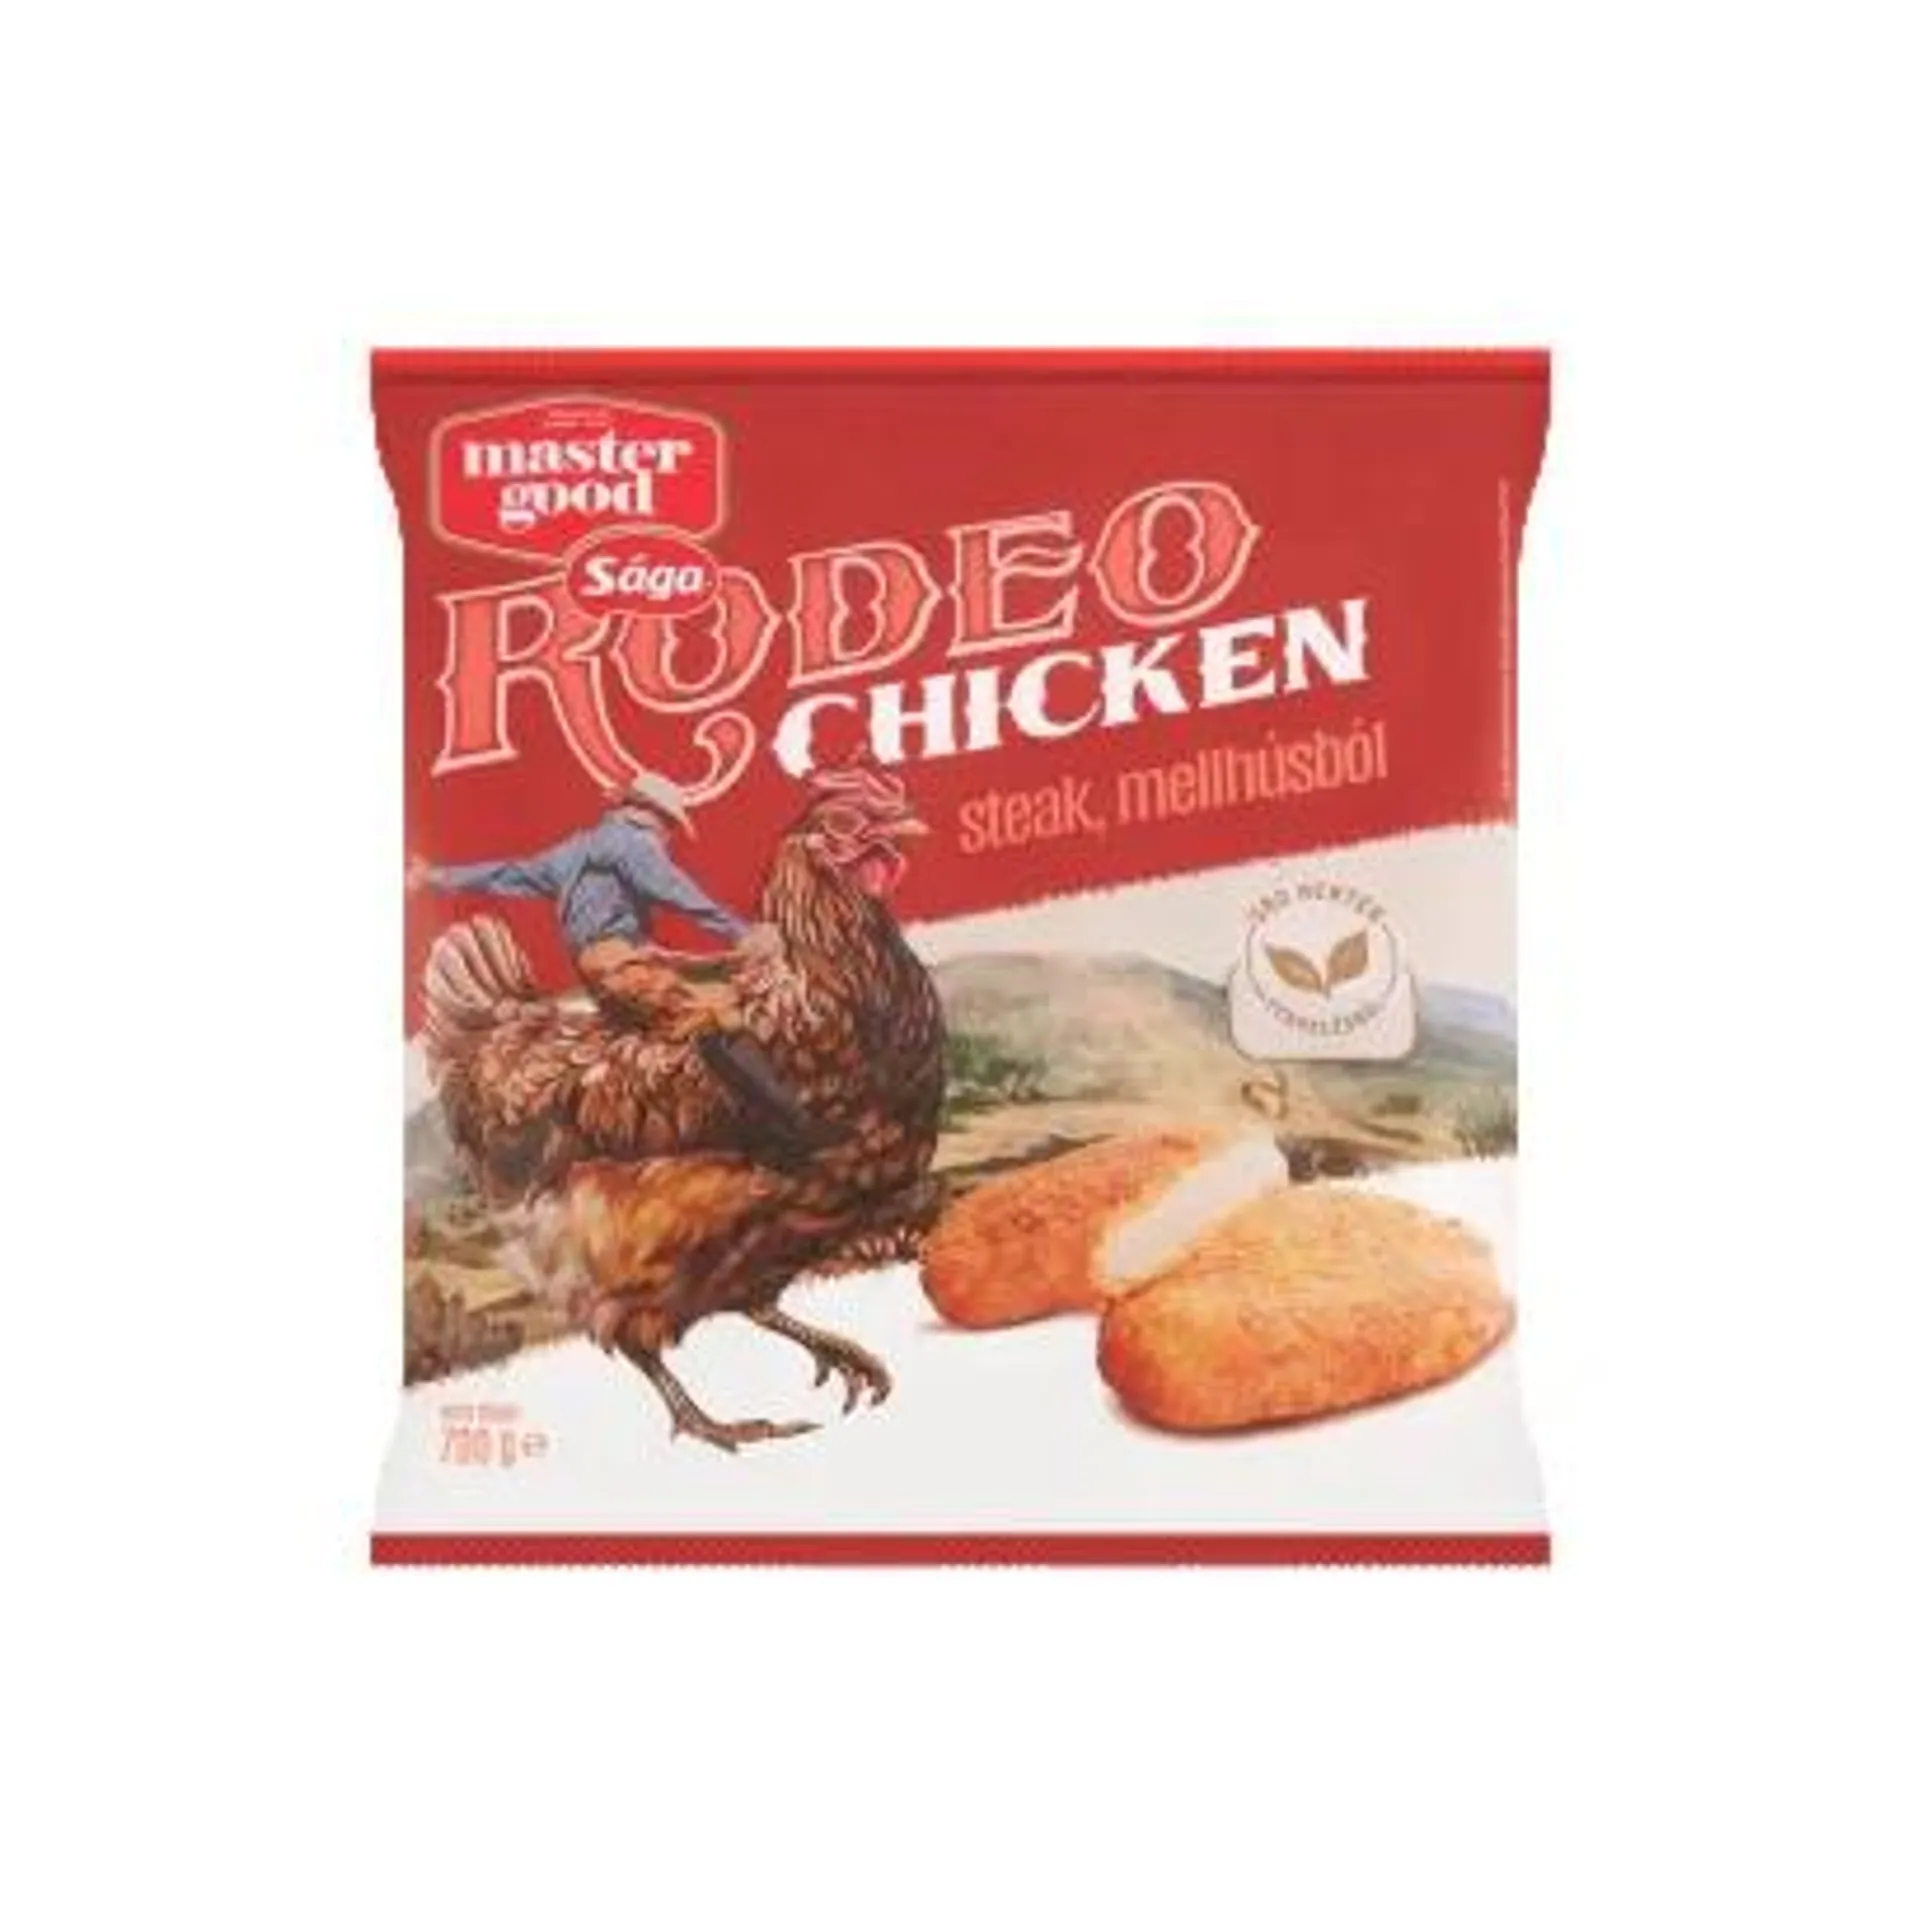 Sága Rodeo Chicken Steak Quick-Frozen Breaded Chicken Breast Product 700 g